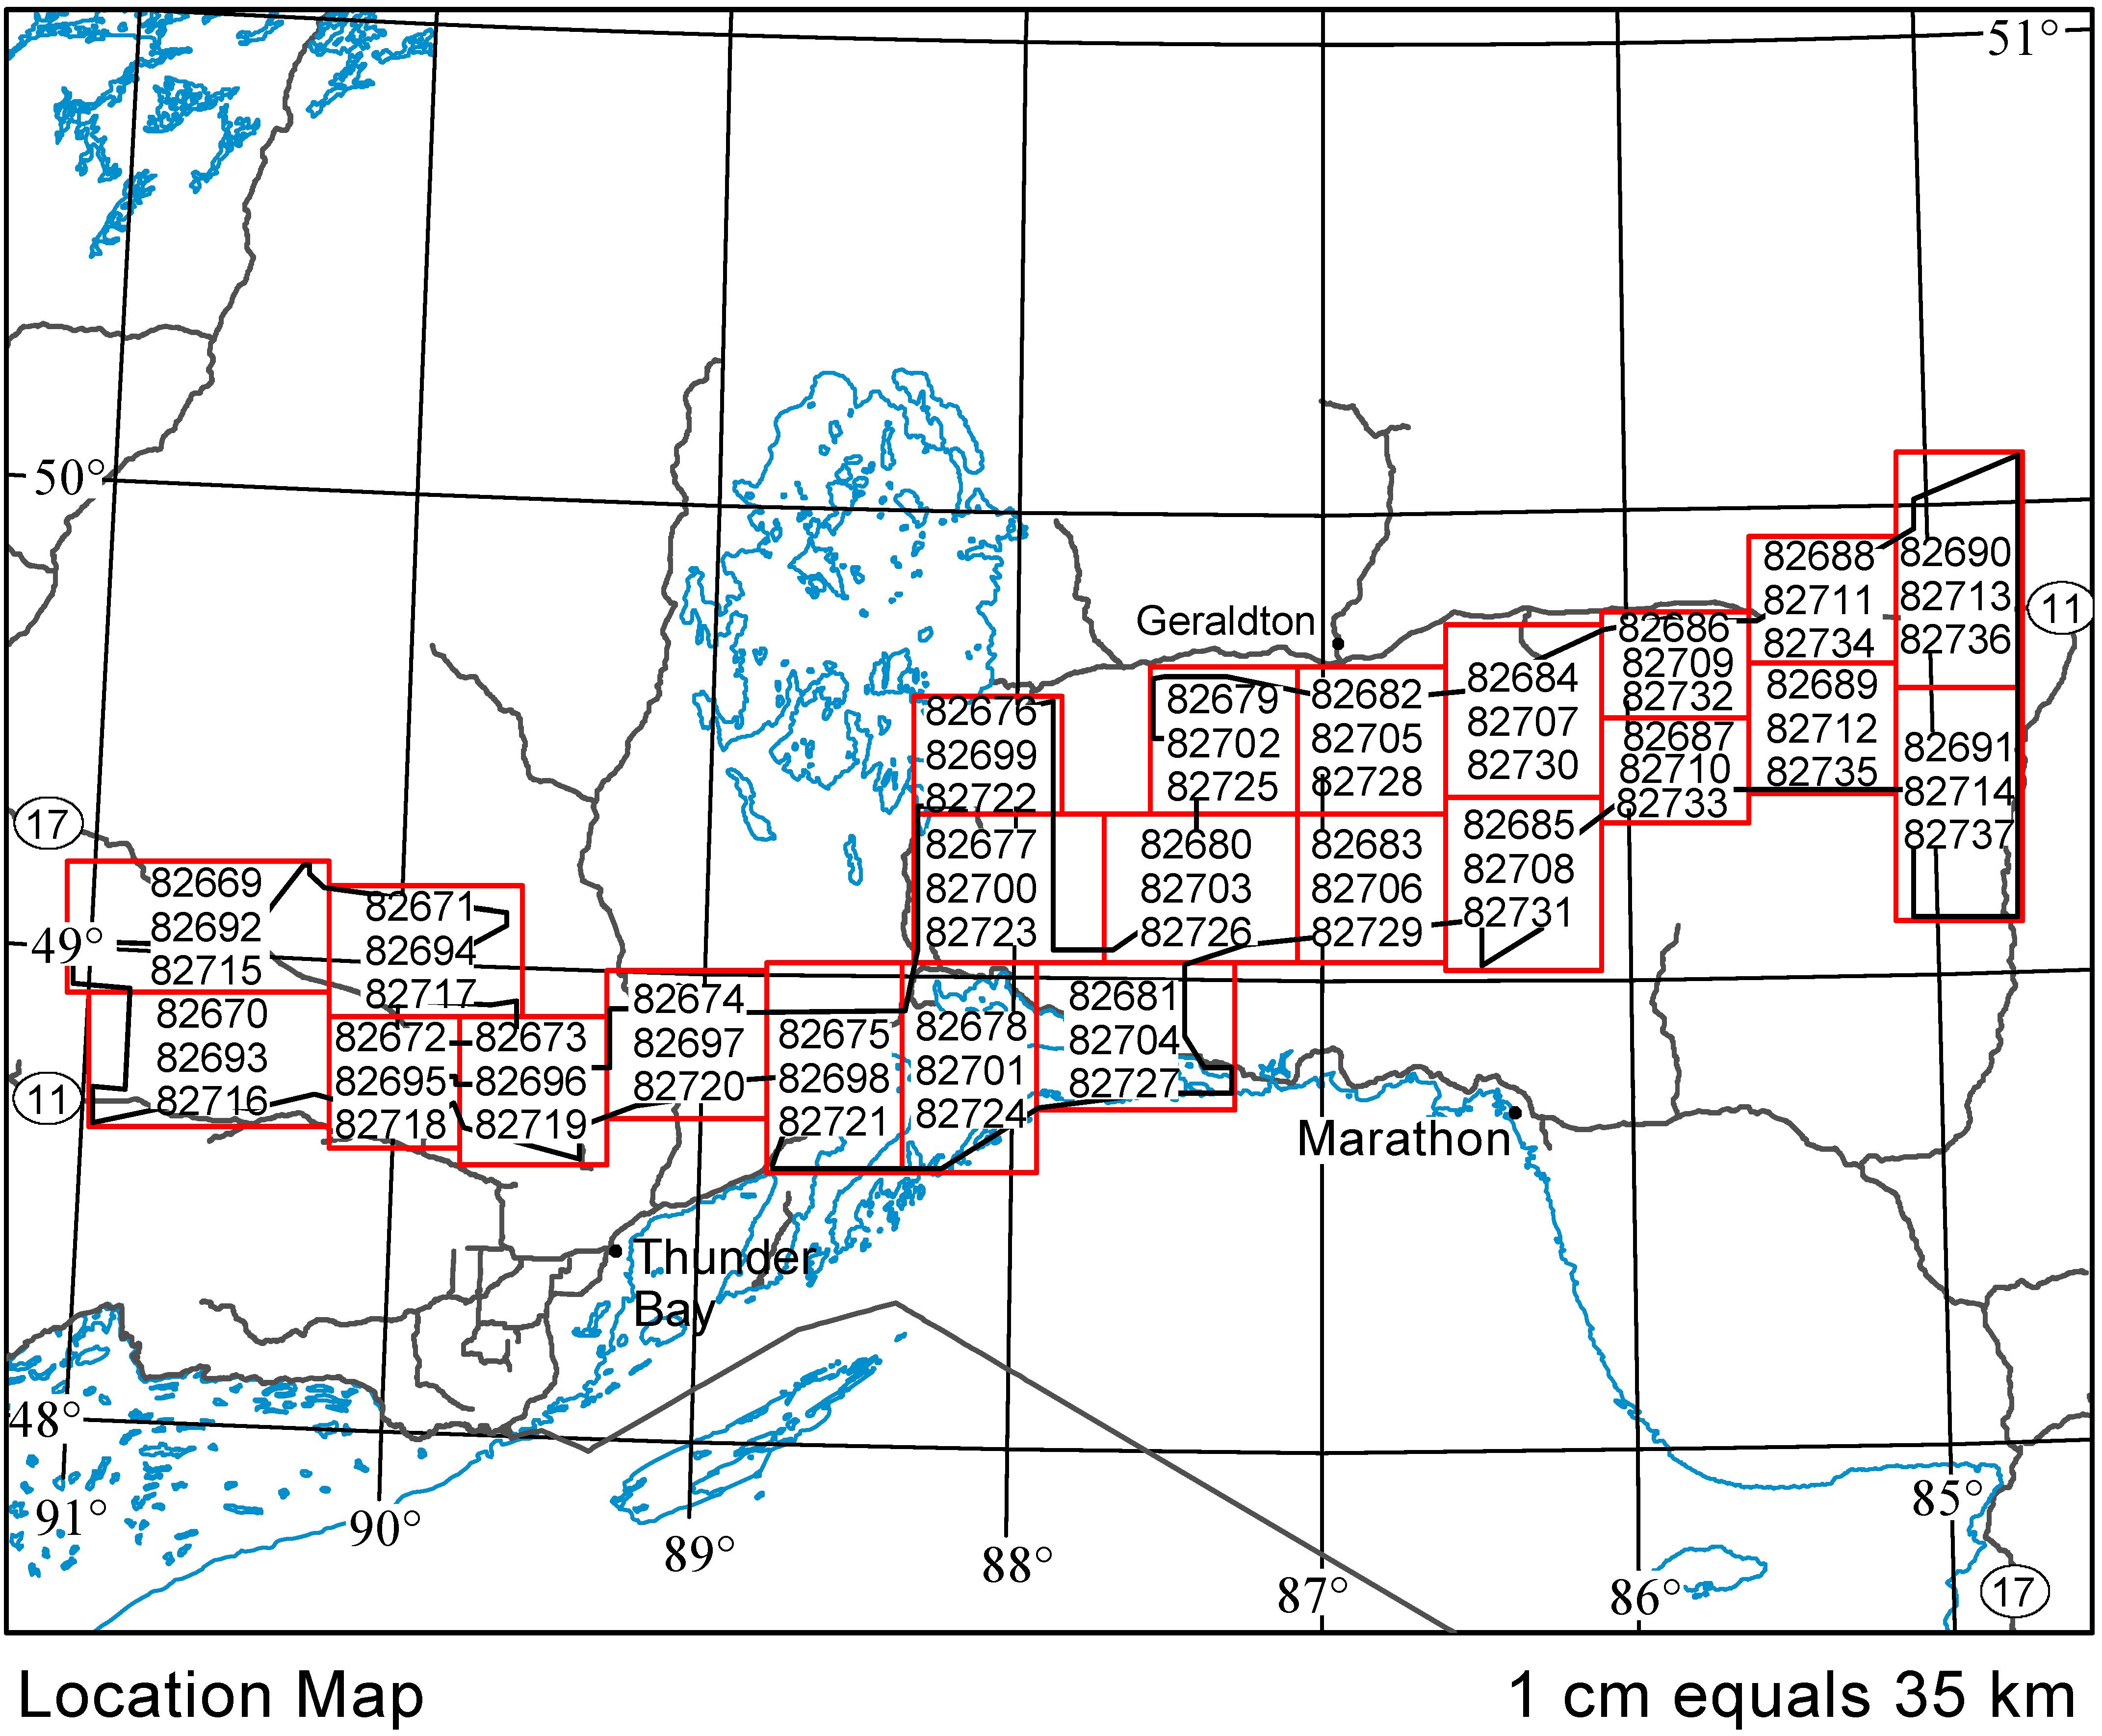 Location map of Lac des Mille Lacs–Nagagami area airborne geophysical survey 1:50000 scale maps